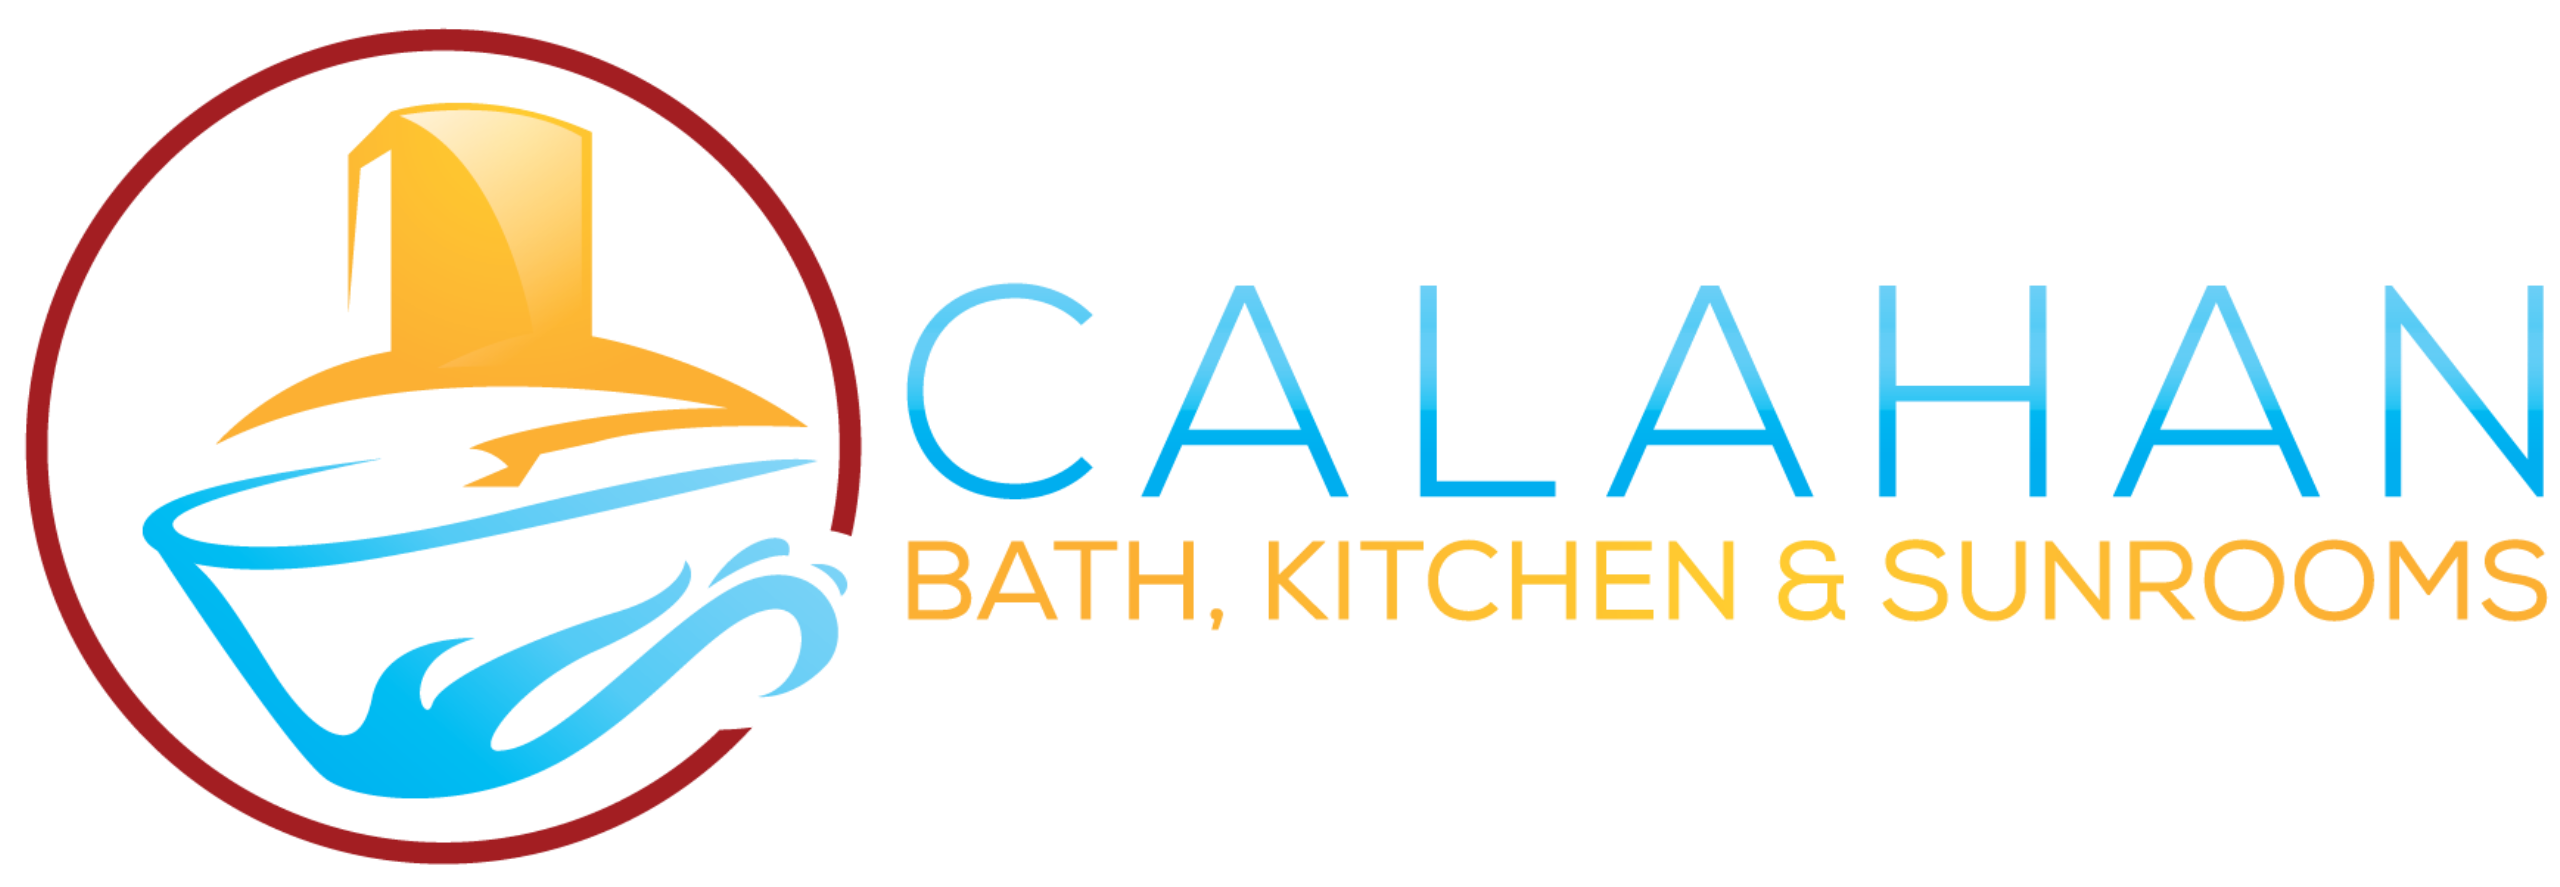 Calahan Bath, Kitchen & Sunroom Logo